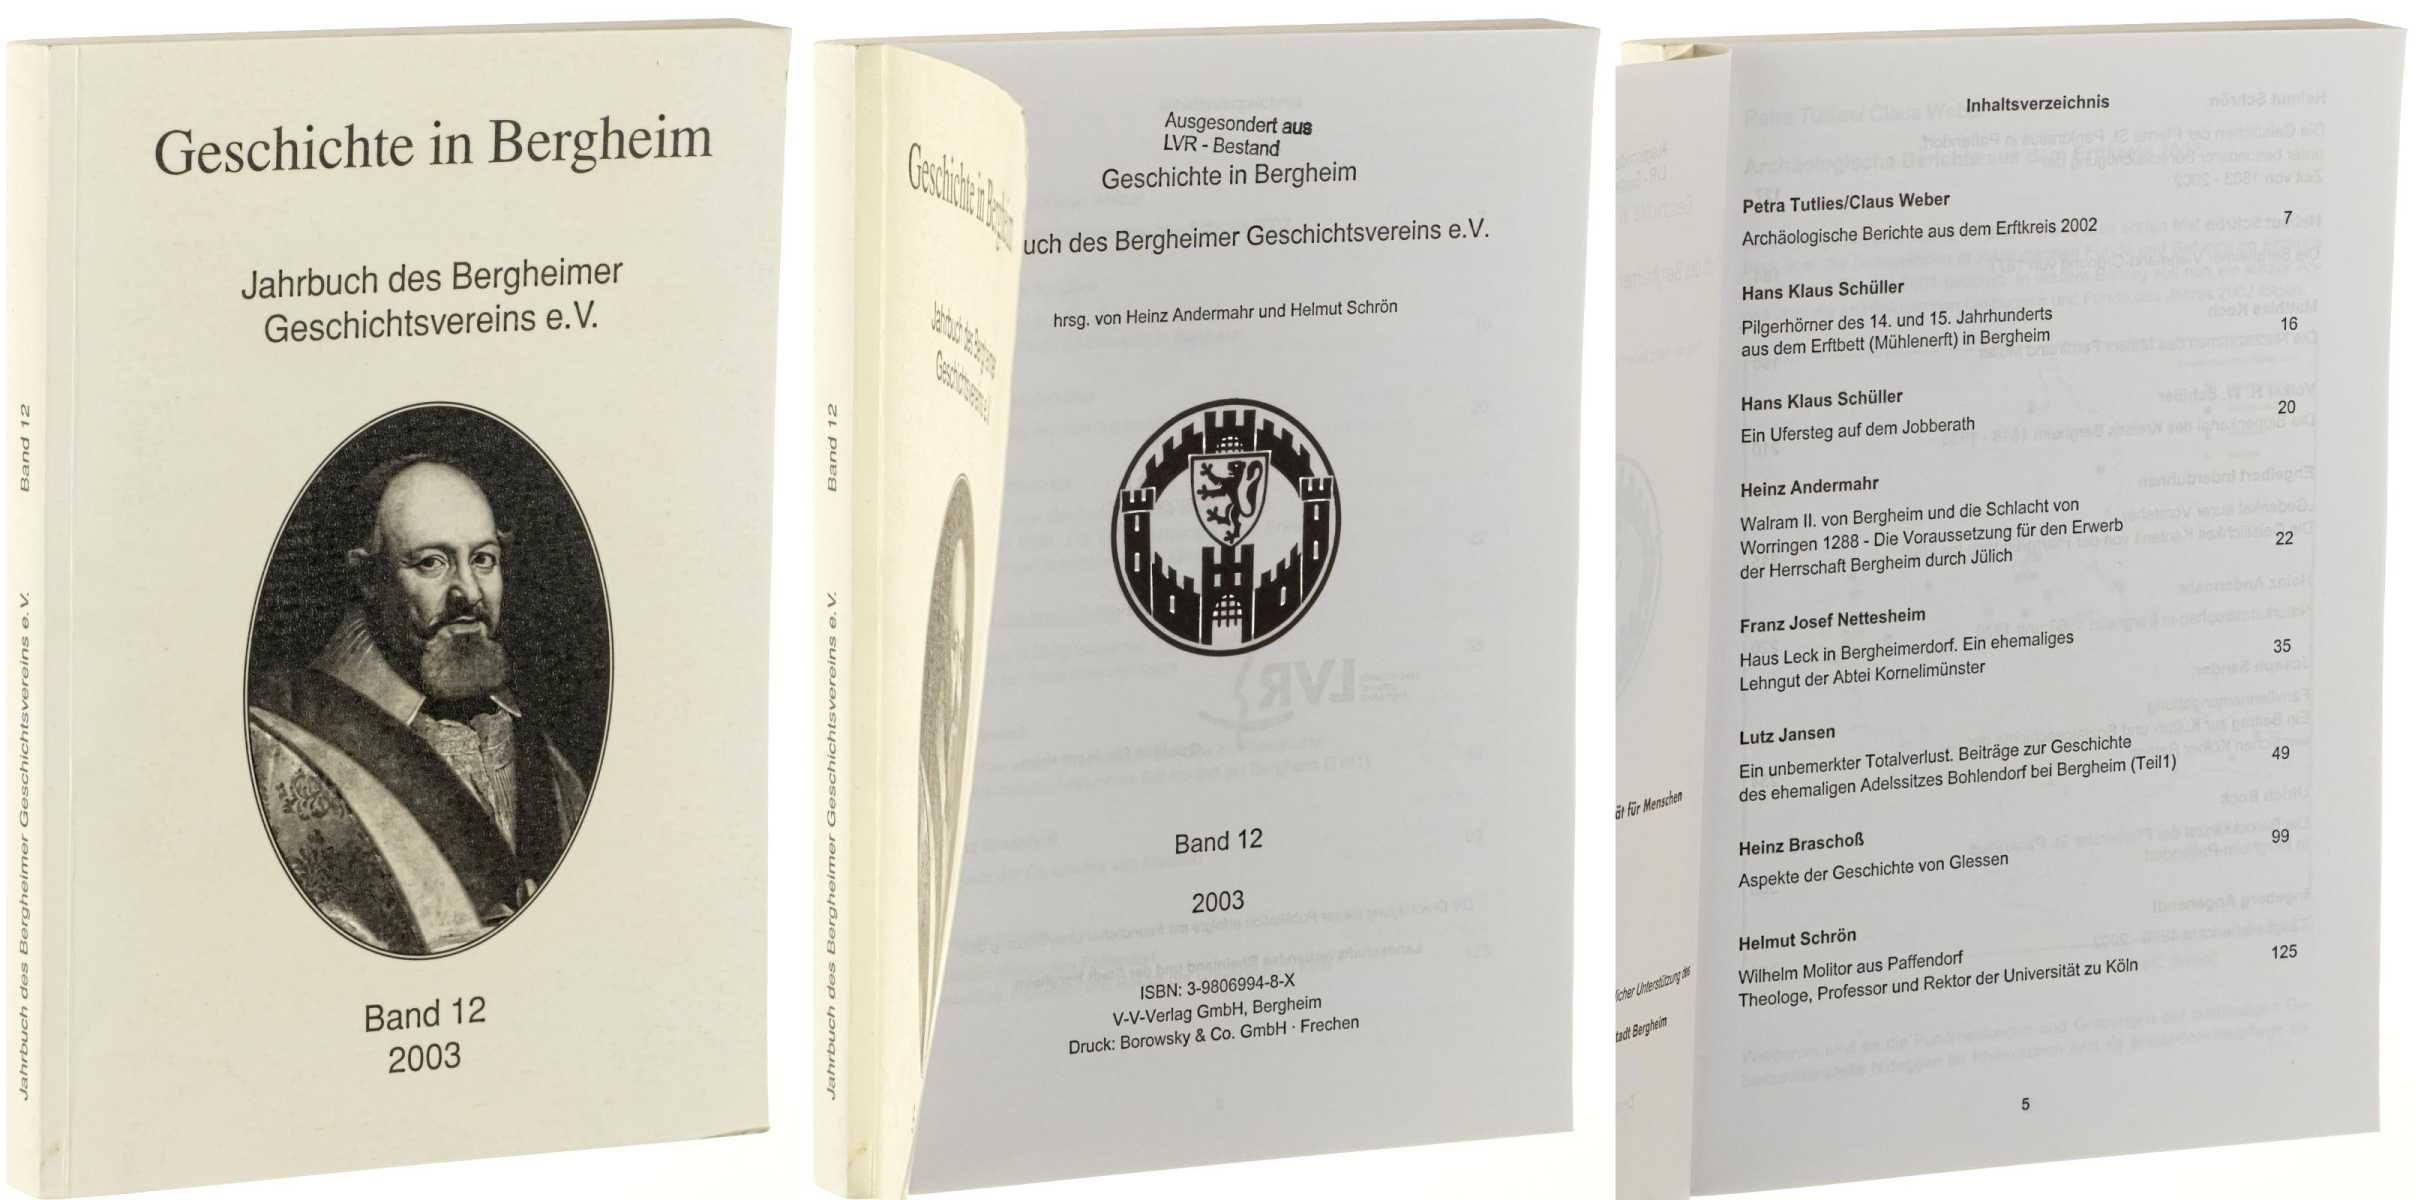   Geschichte in Bergheim. Jahrbuch des Bergheimer Geschichtsvereins e.V. 